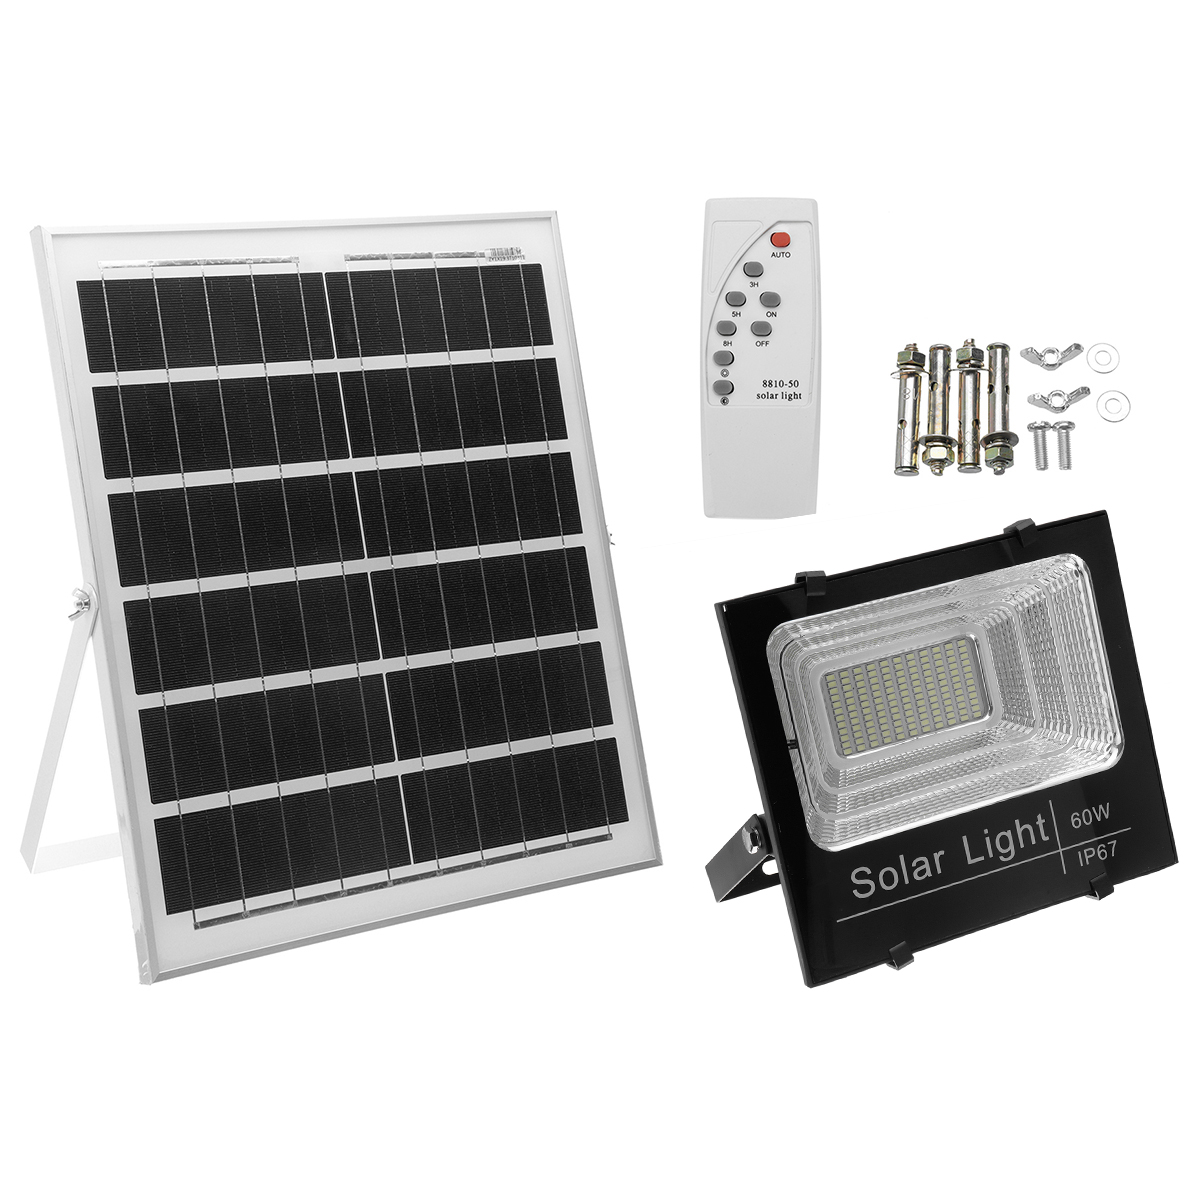 25w40w60w-Solar-Flood-Light-Solar-LED-Spotlight-W-ManualRemote-Control-Solar-Panel-IP67-Waterproof-1524300-6